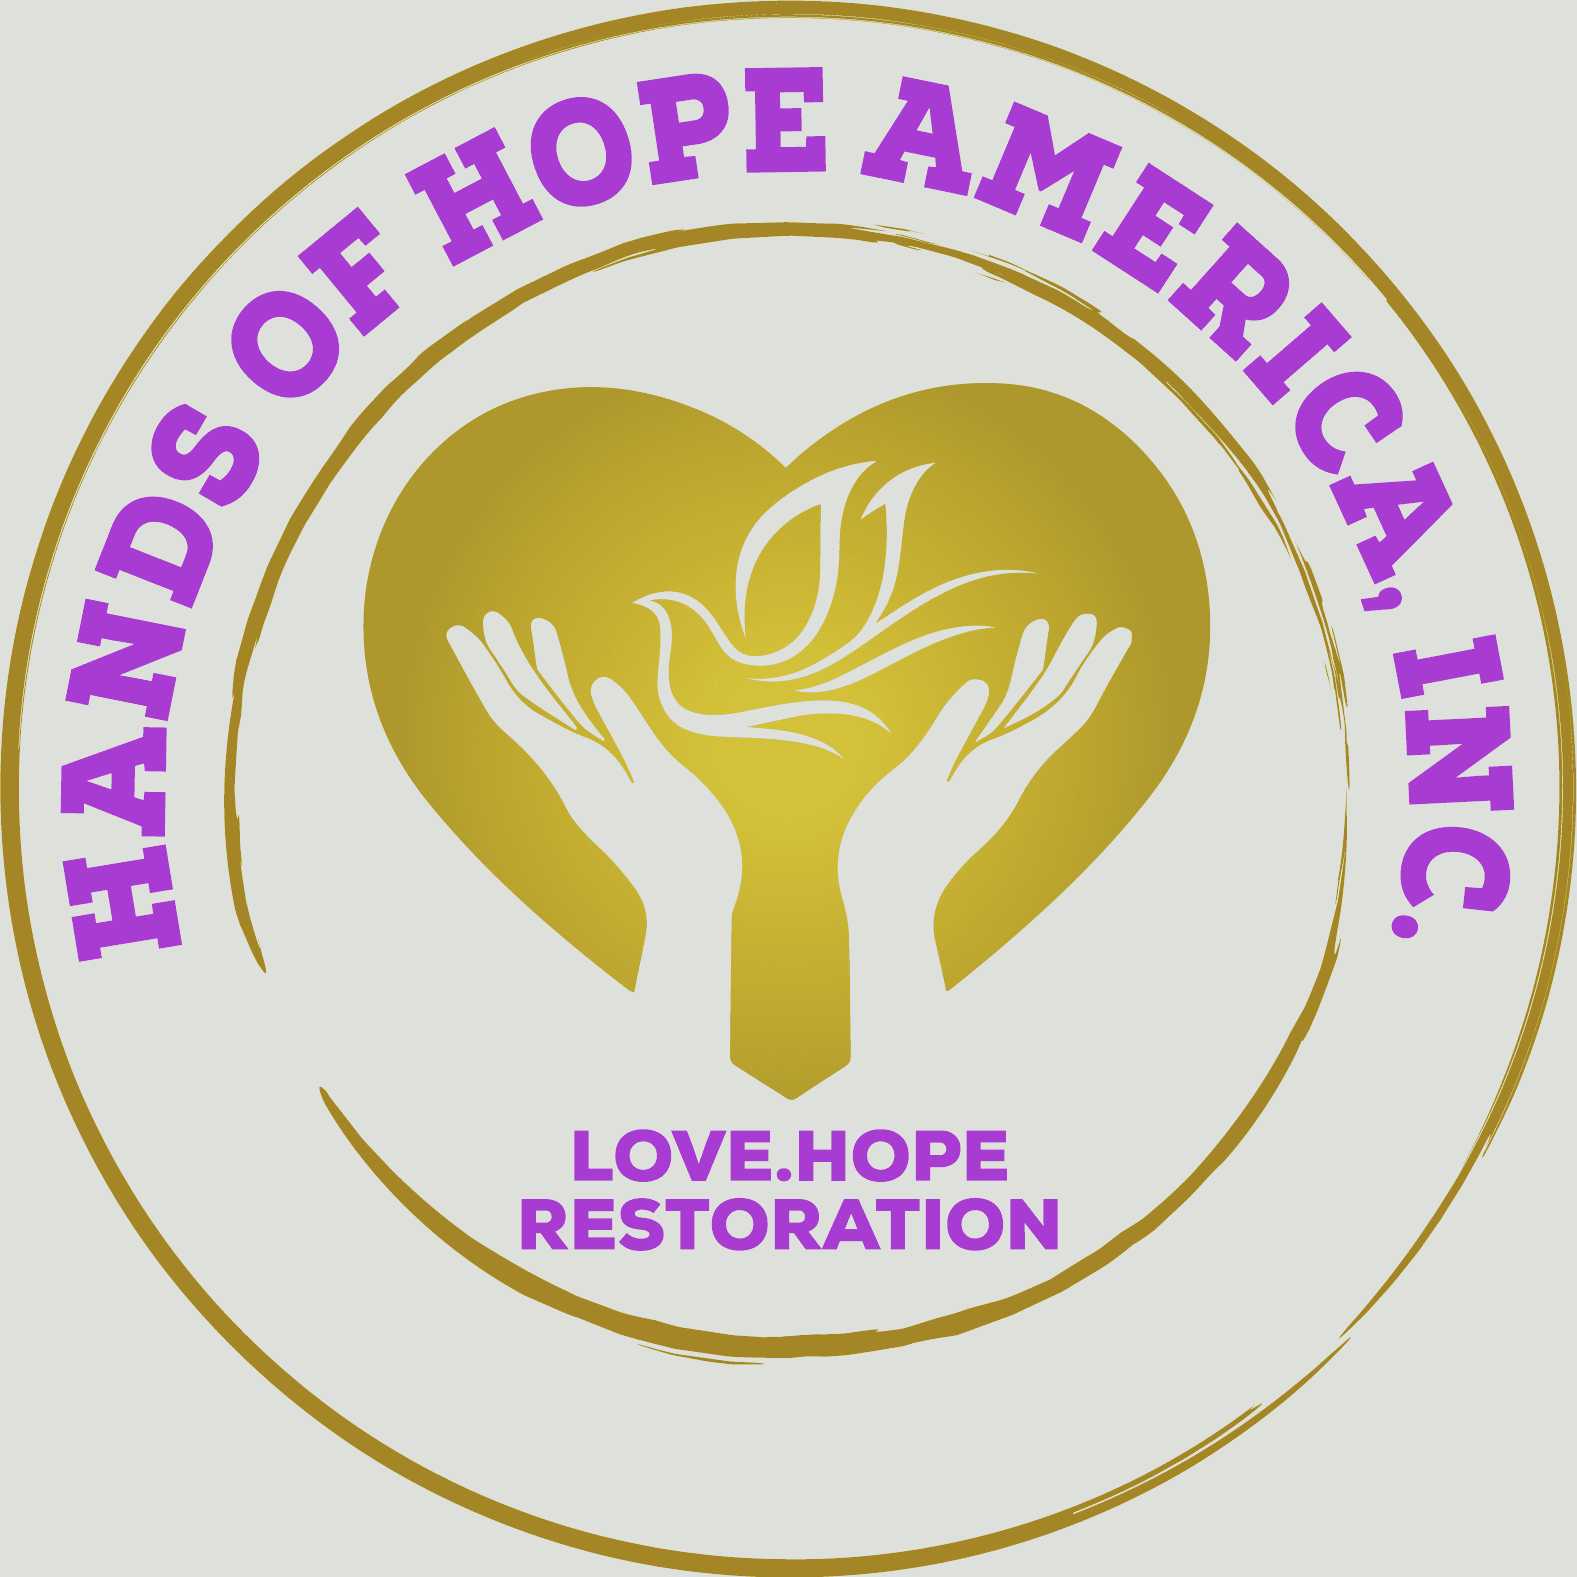 Hands of Hope America, Inc.